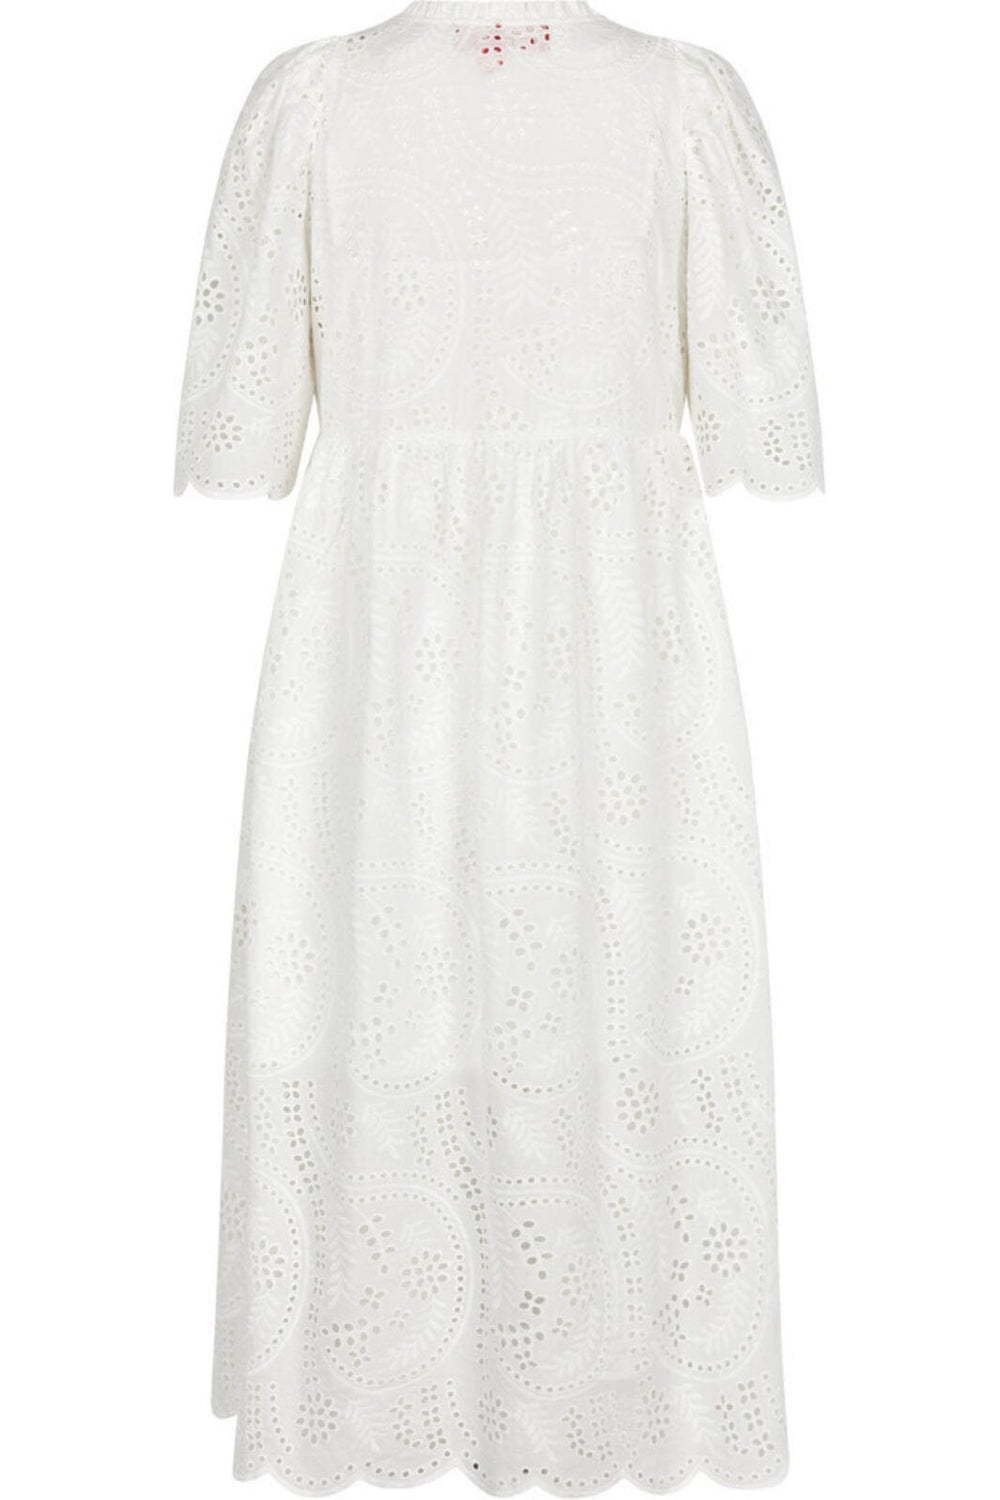 Forudbestilling - Cras - Breezecras Dress - 1000 White Kjoler 